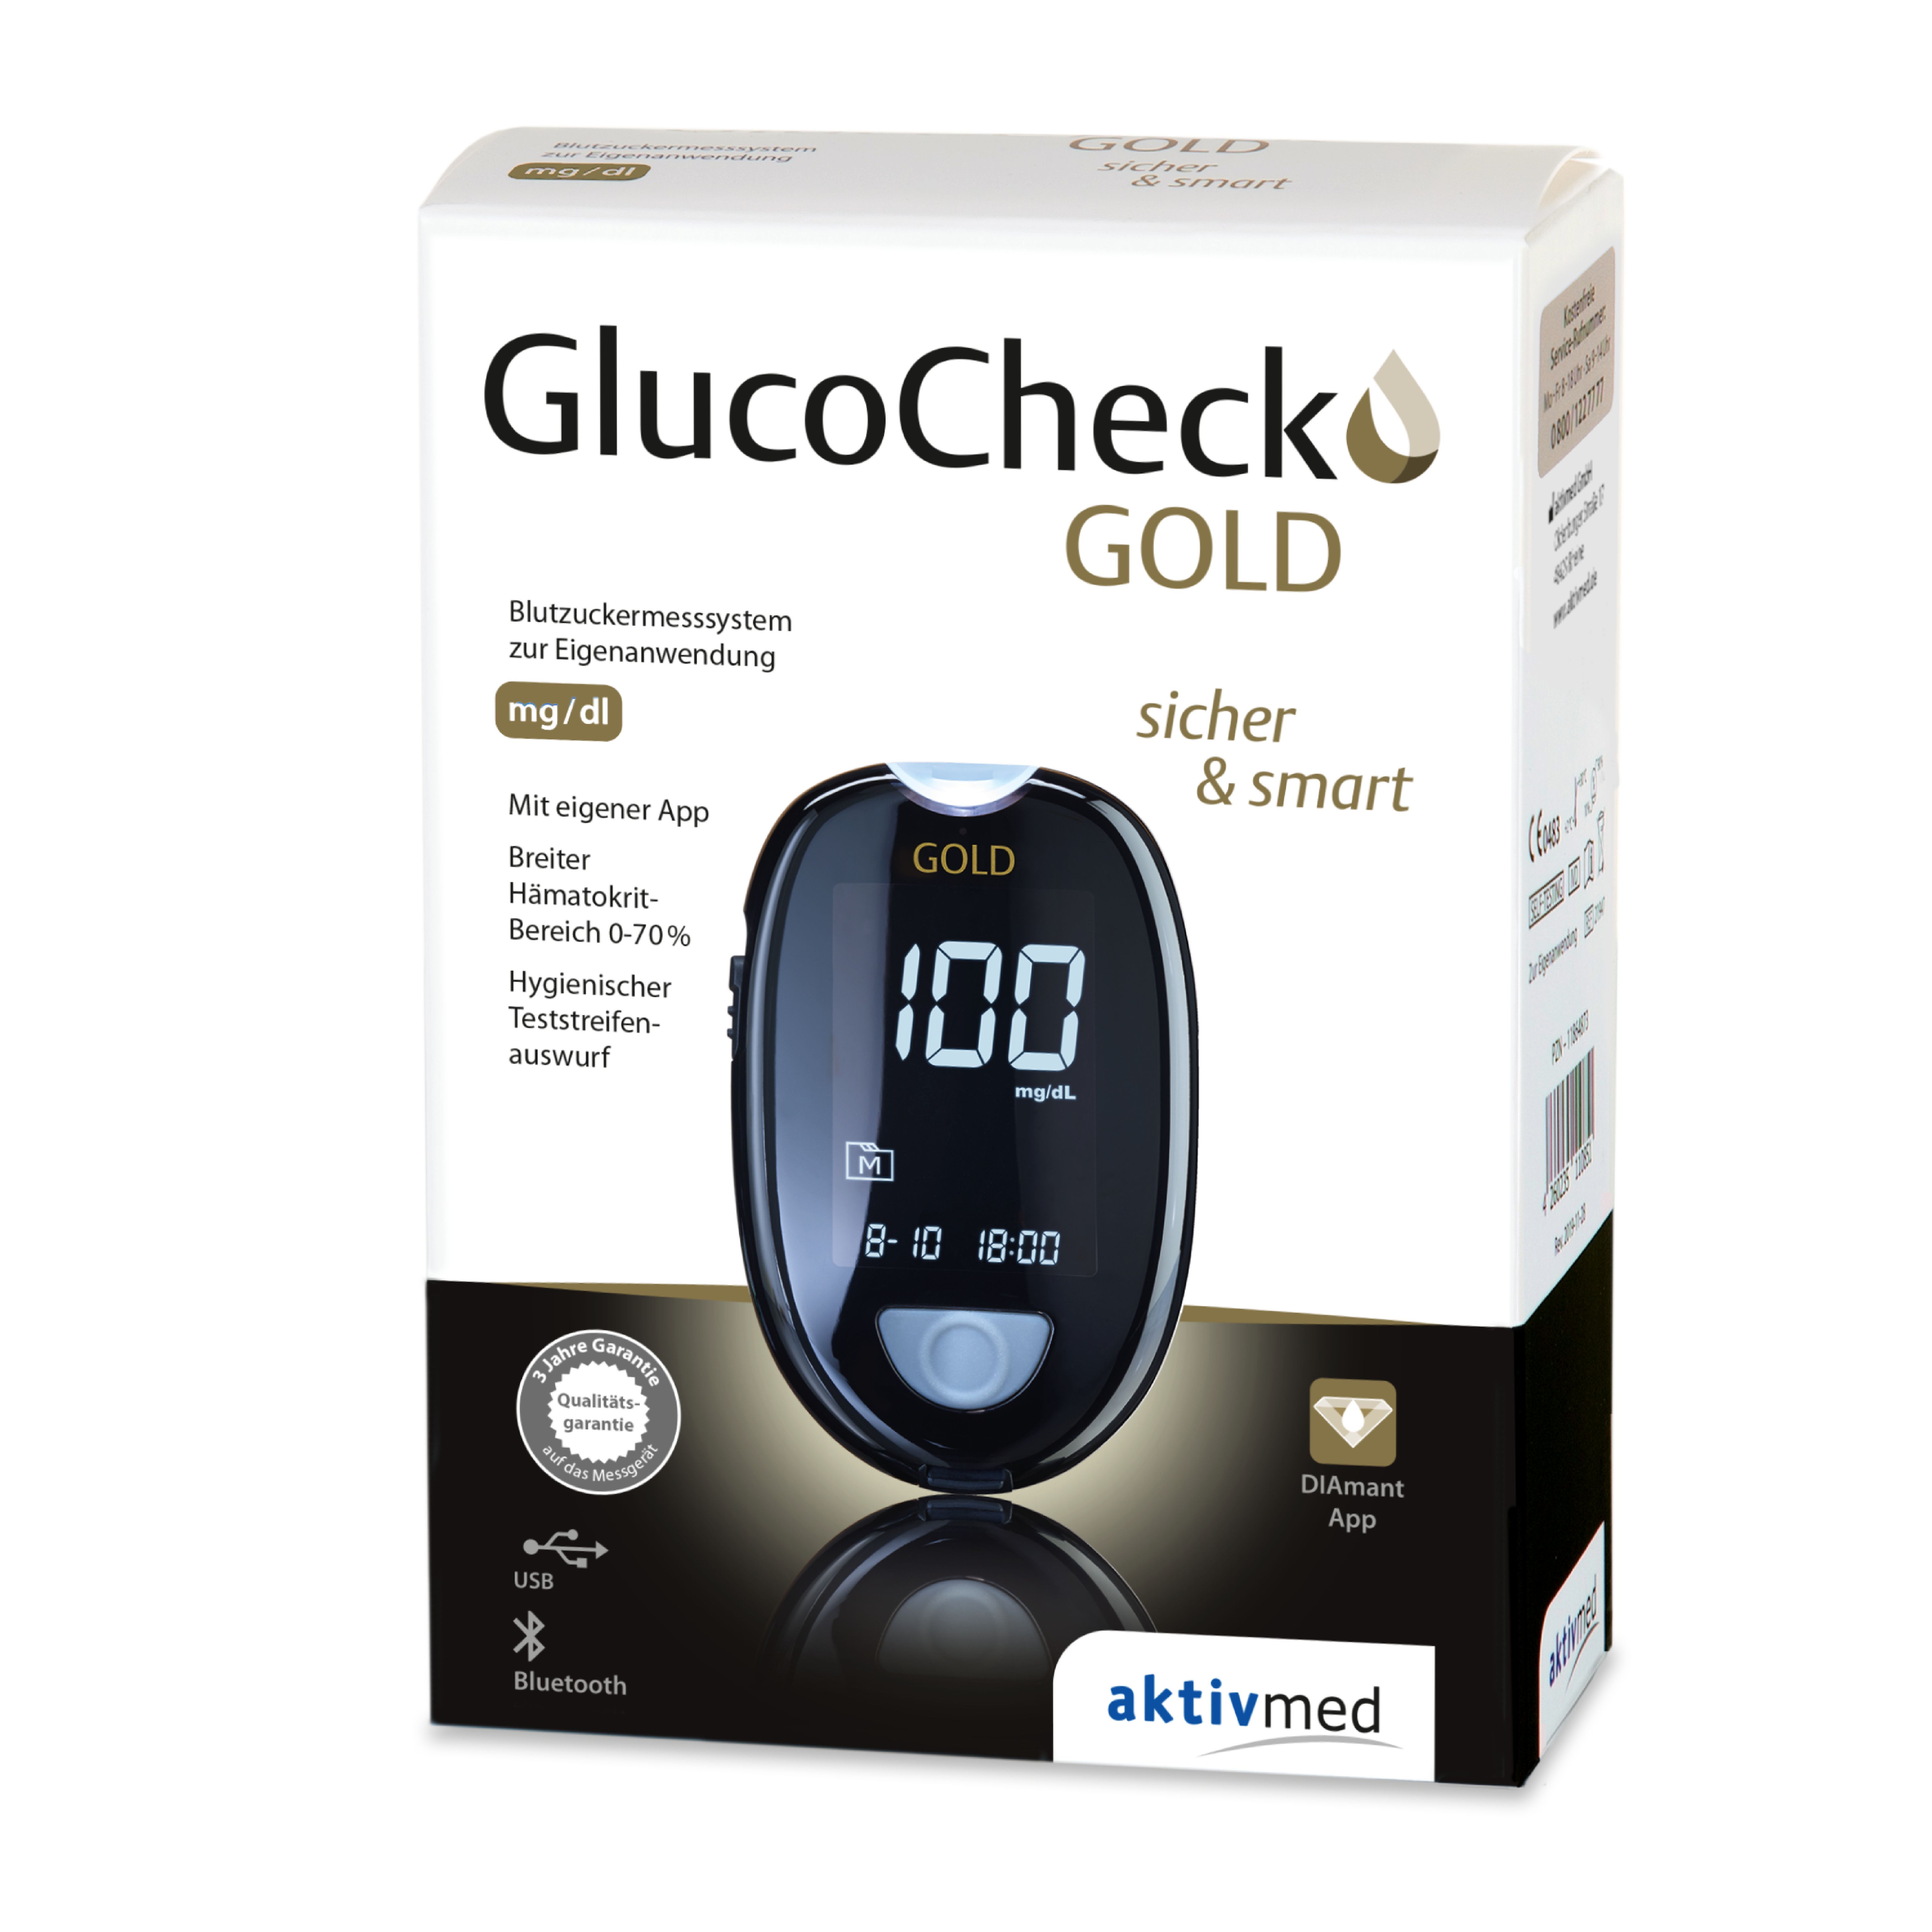 GlucoCheck GOLD mg/dl